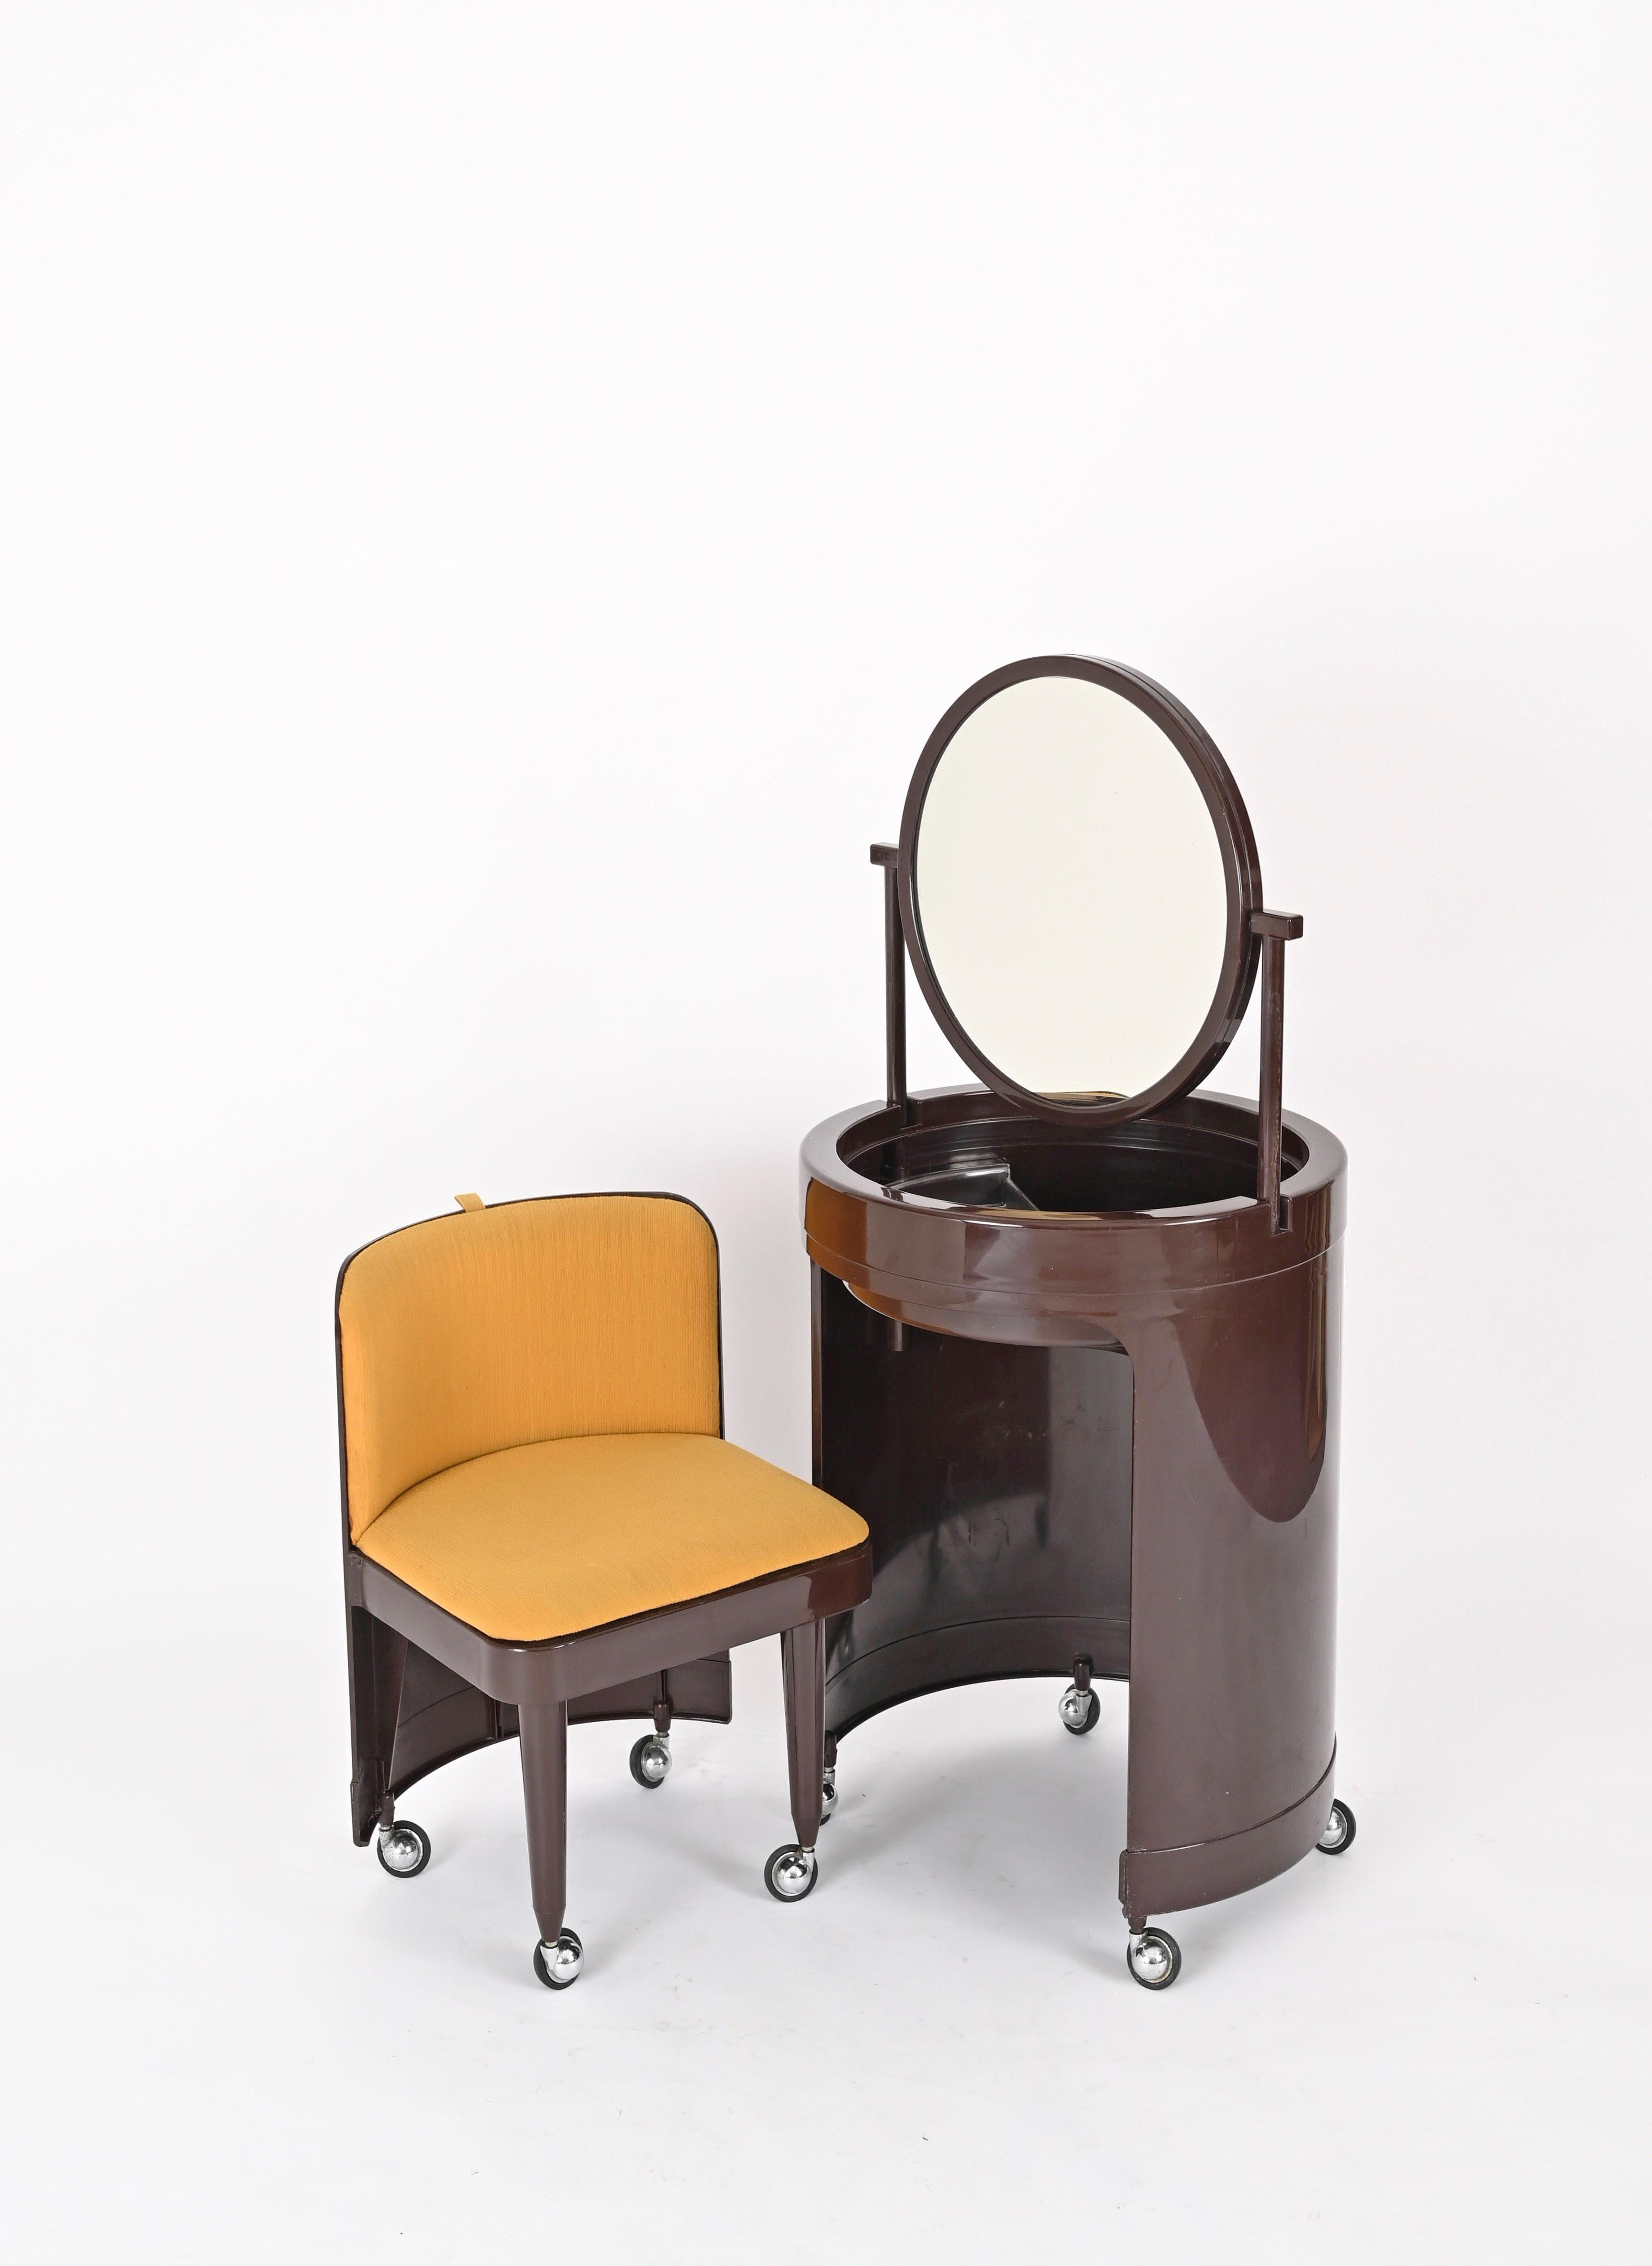 Fabric Studio Kastilia Silvi, Italian Brown Vanity Table with Yellow Seat, 1970s